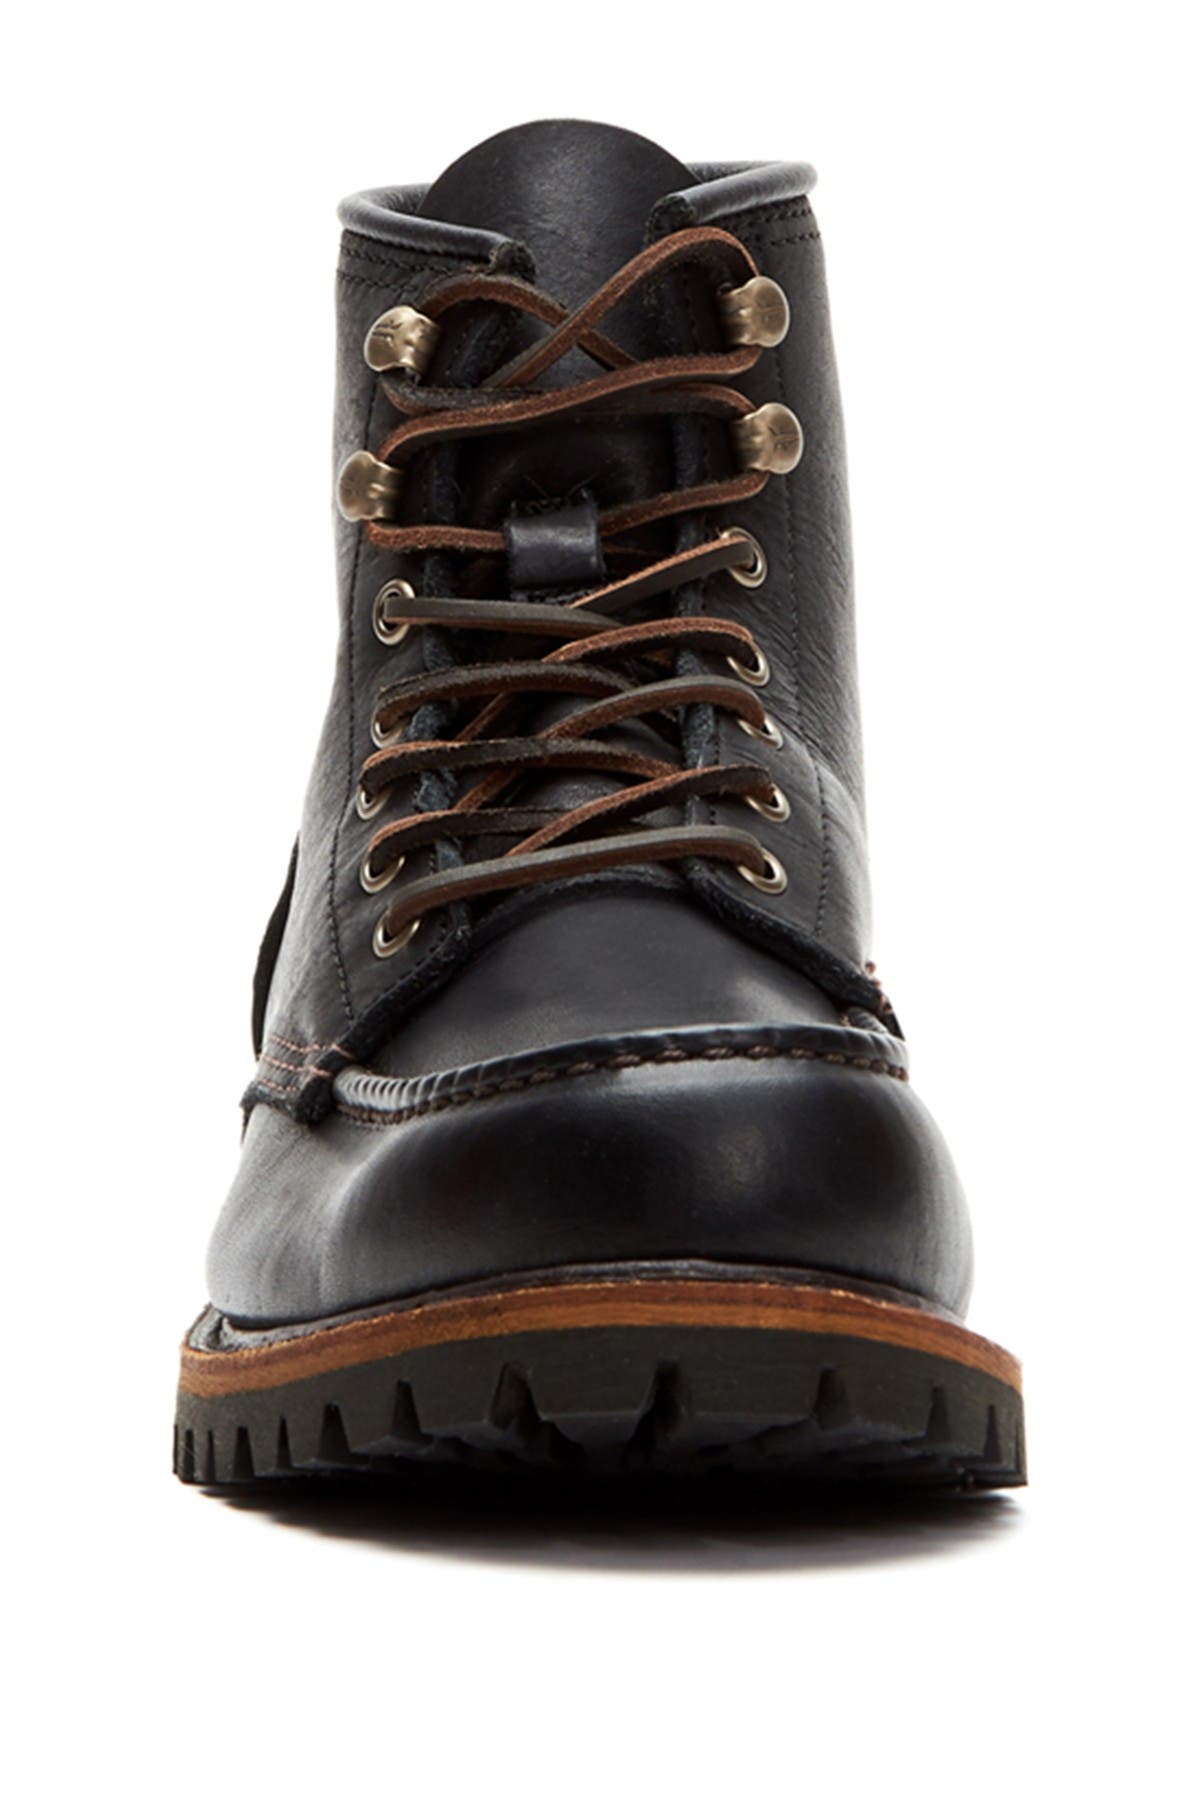 frye men's pine lug leather work boots